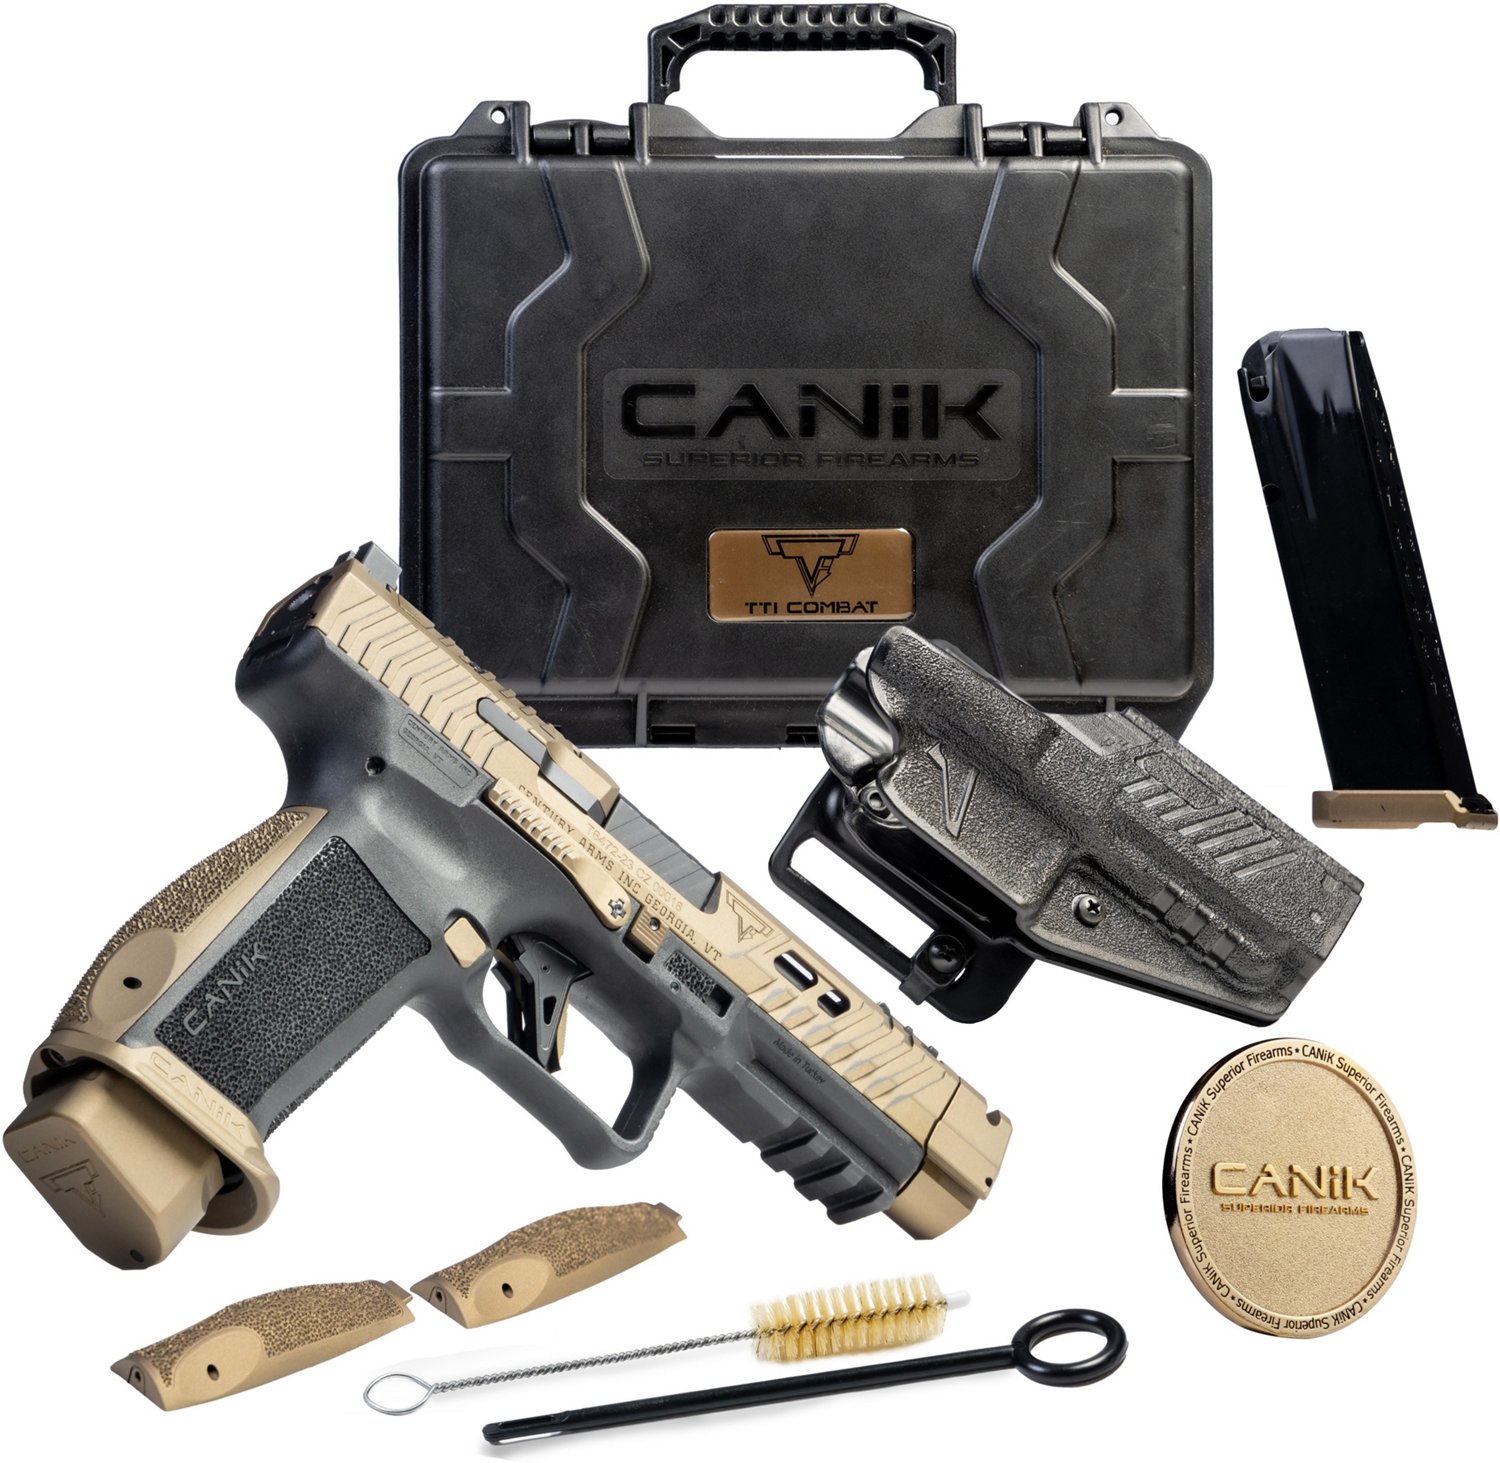 Canik TTI Combat 9MM 18RD Pistol Kit                                                                                             - view number 1 selected